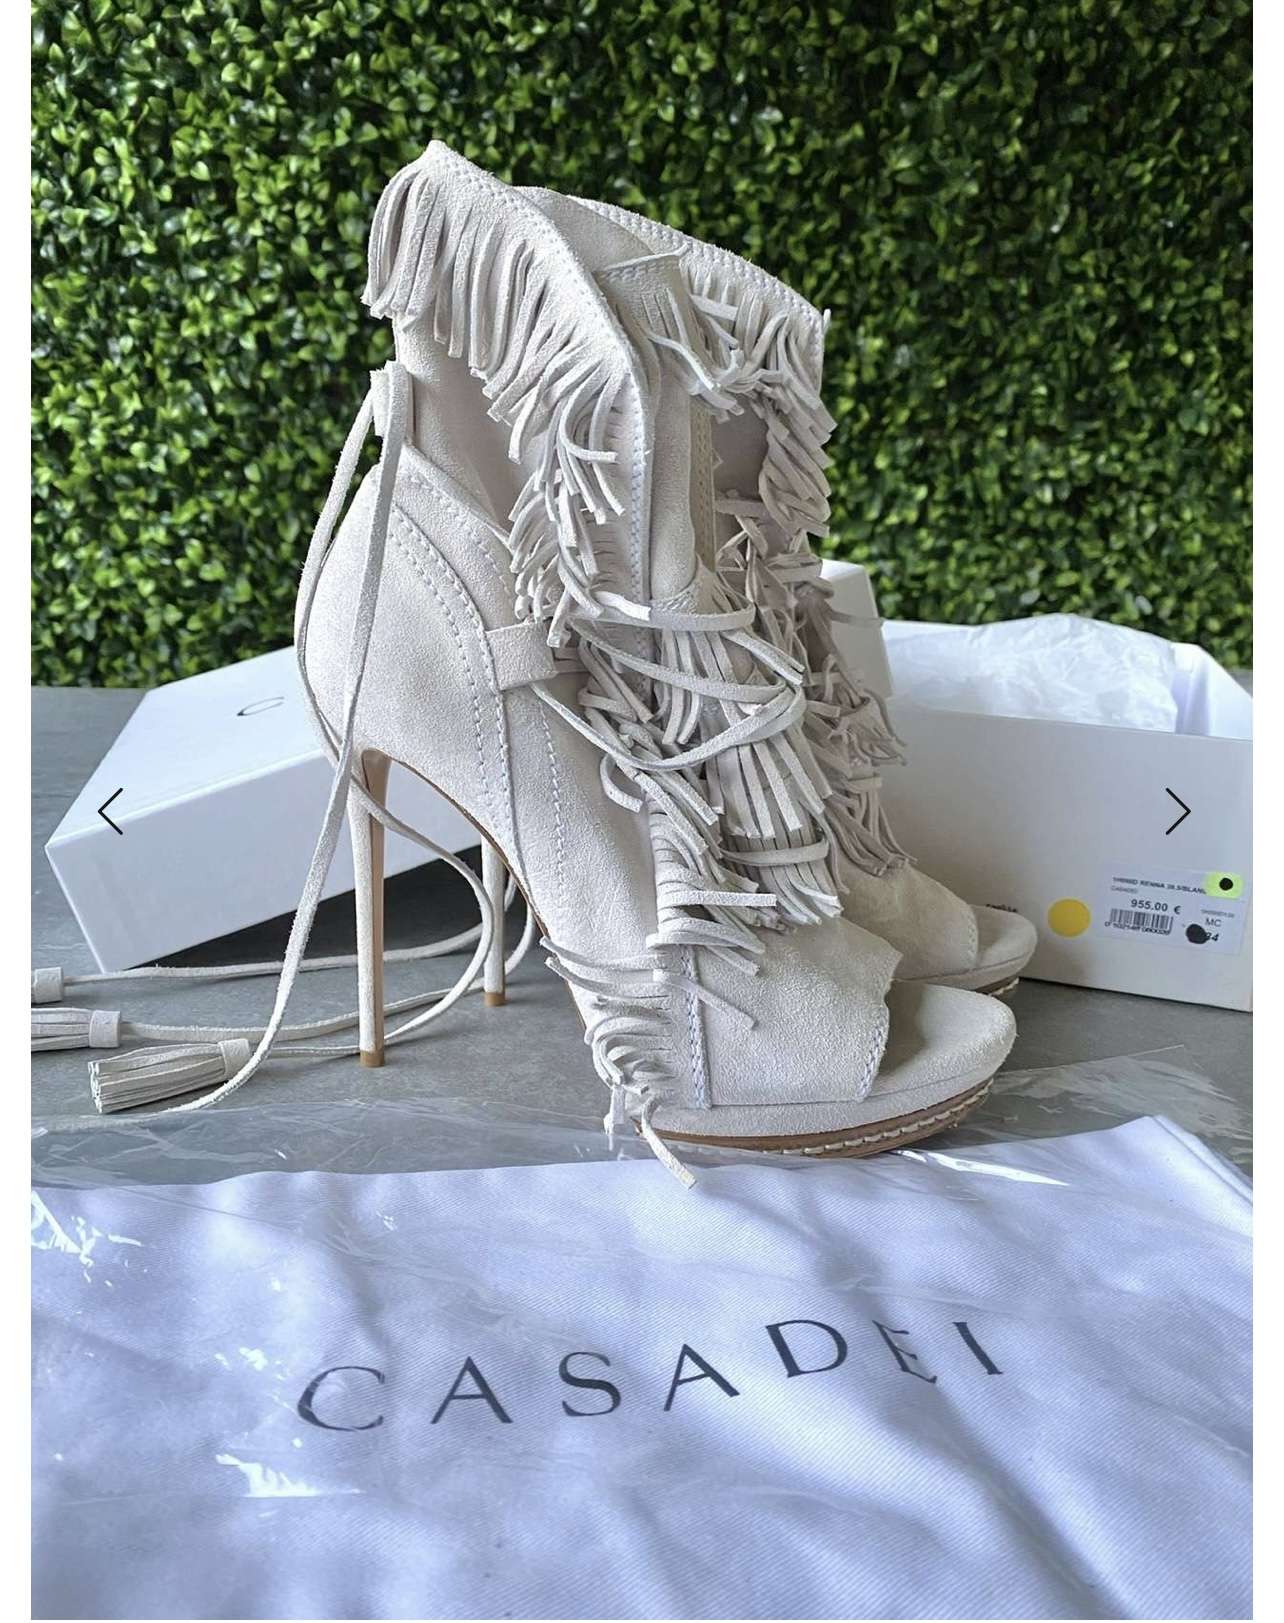 Casadei boots